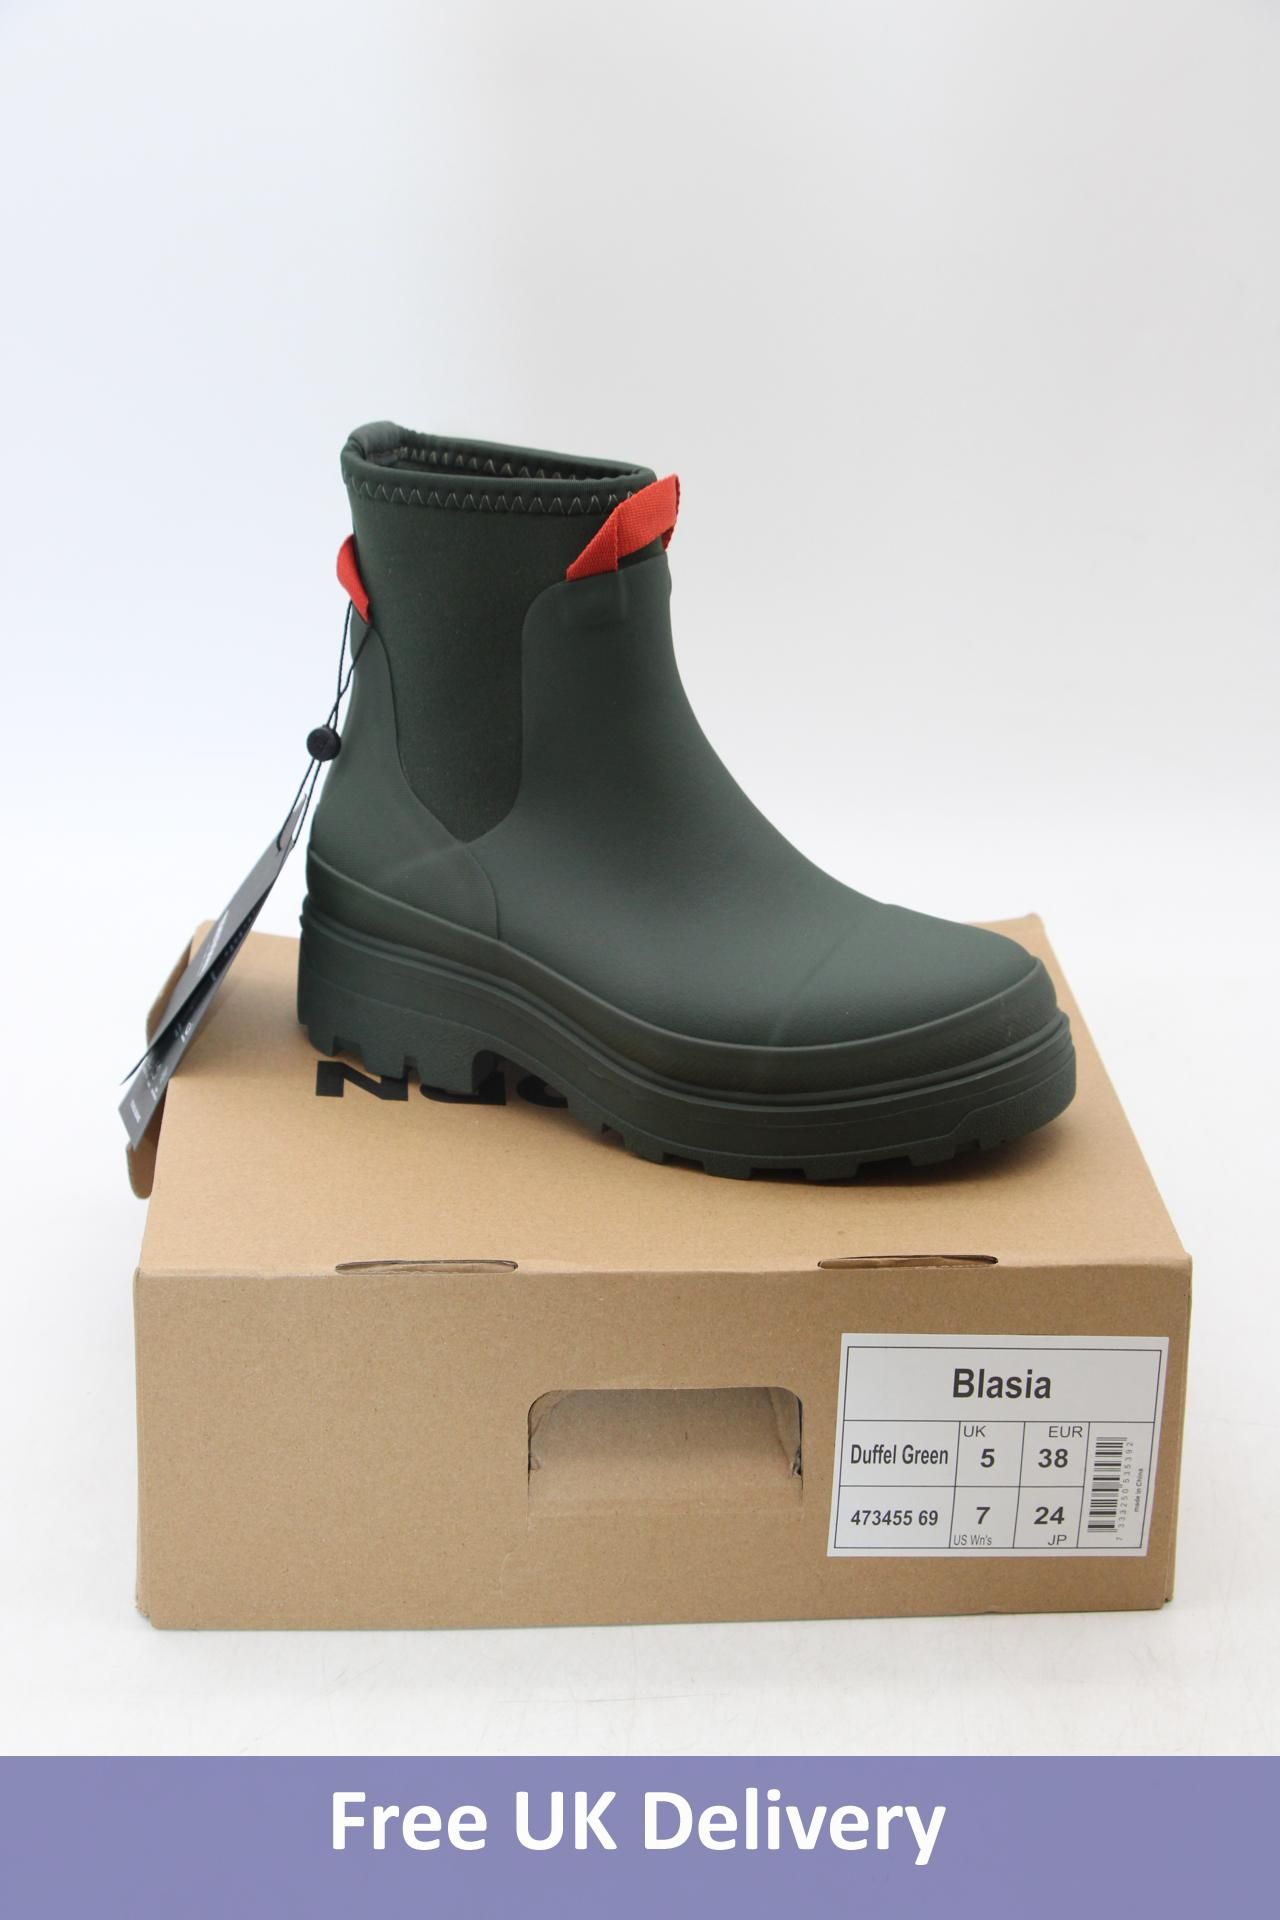 Tretorn Blasia Rubber Boots, Duffel Green, UK 5. Box damaged